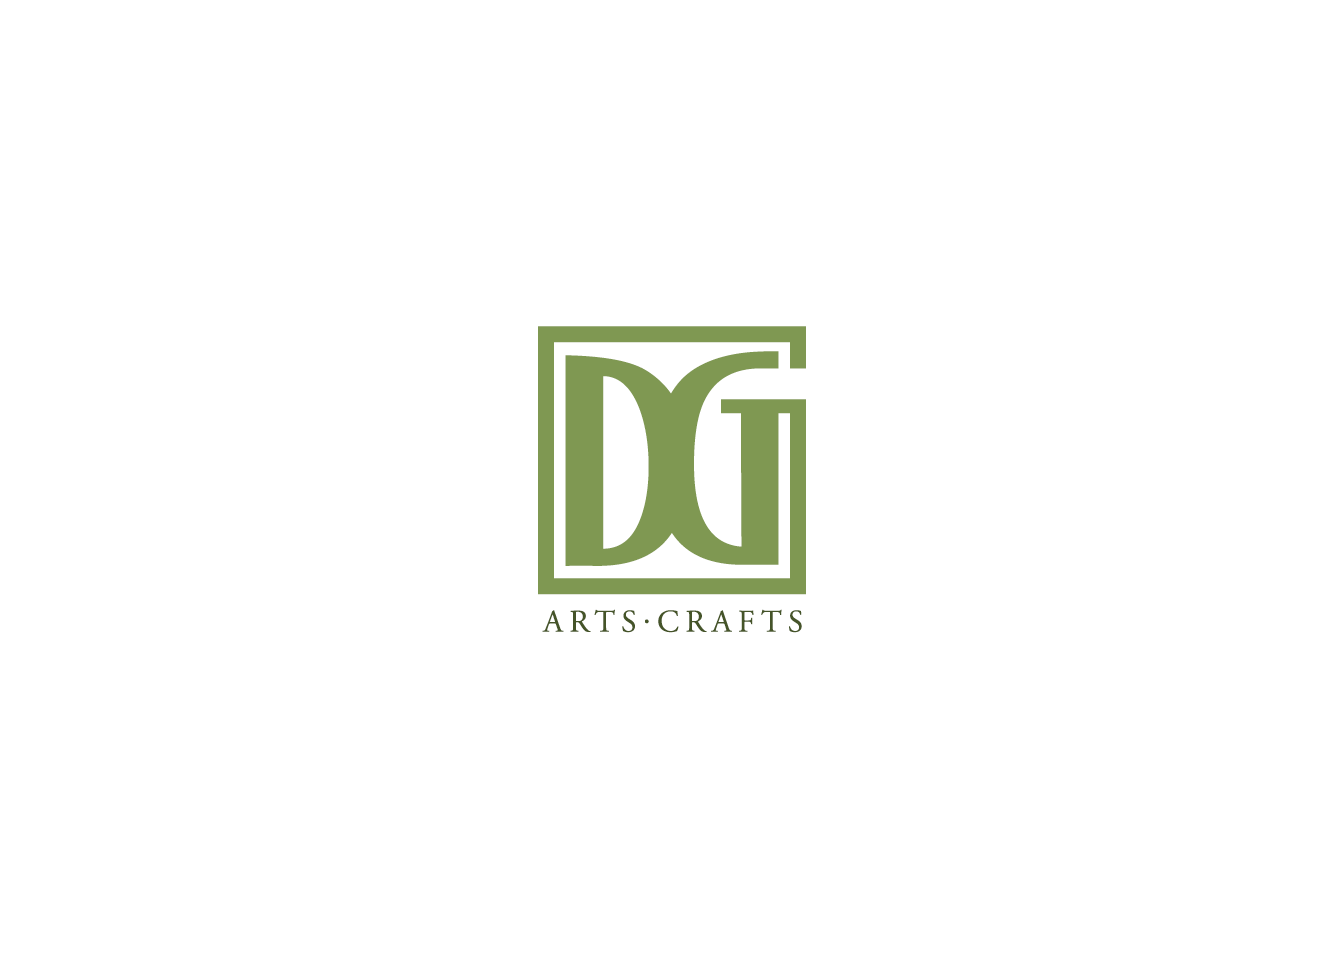 DG Arts + Crafts